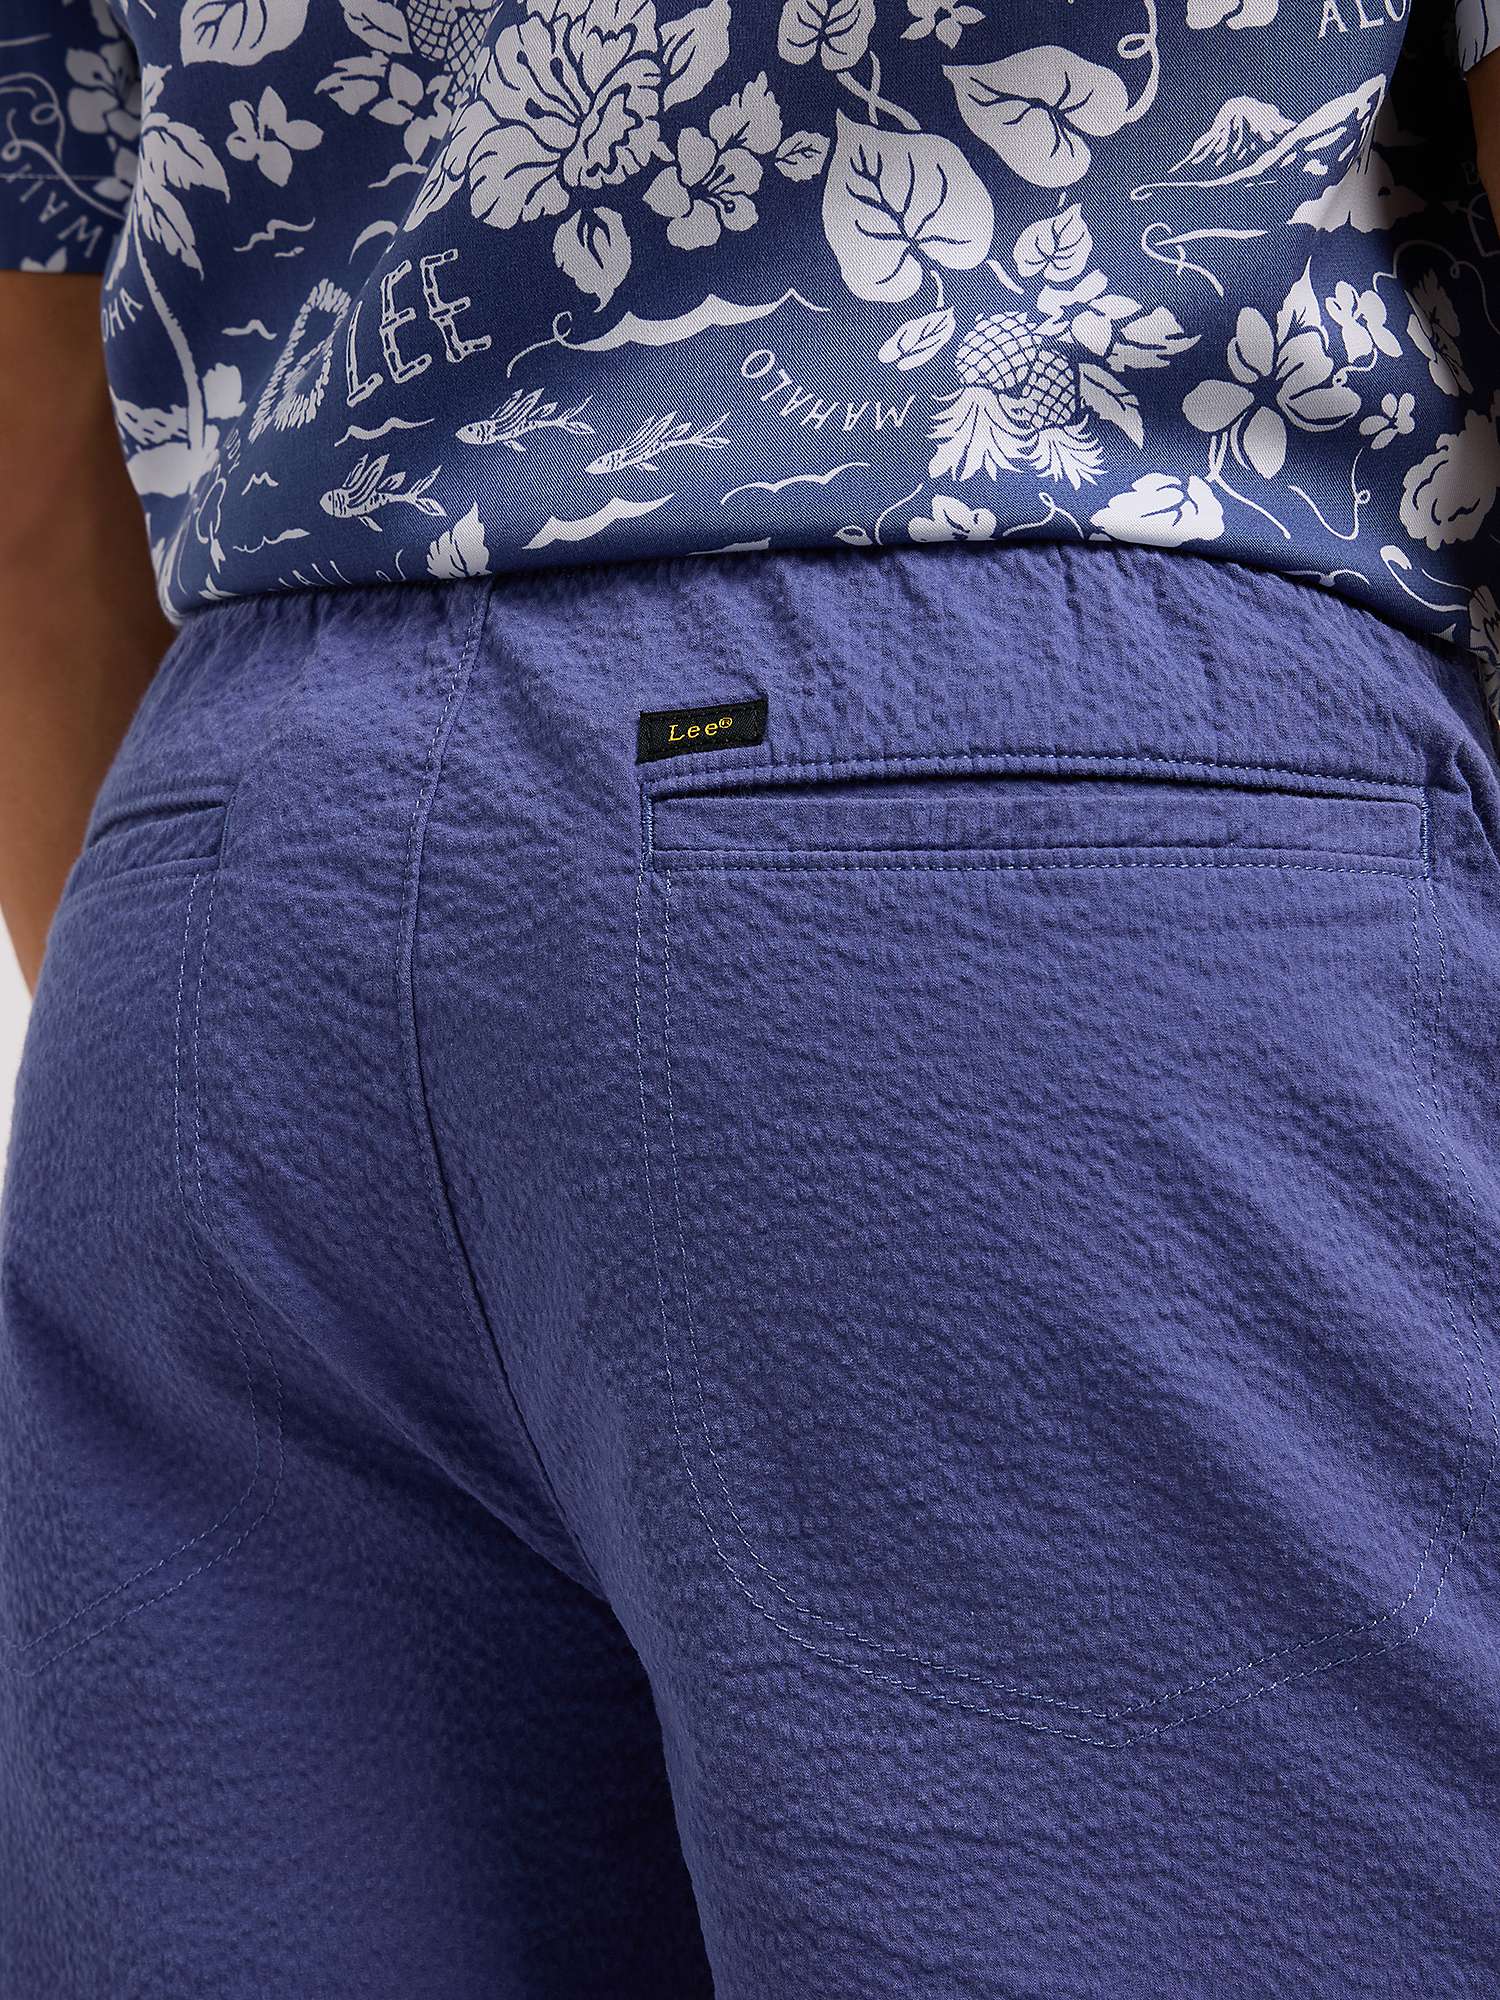 Buy Lee Textured Drawstring Shorts, Surf Blue Online at johnlewis.com